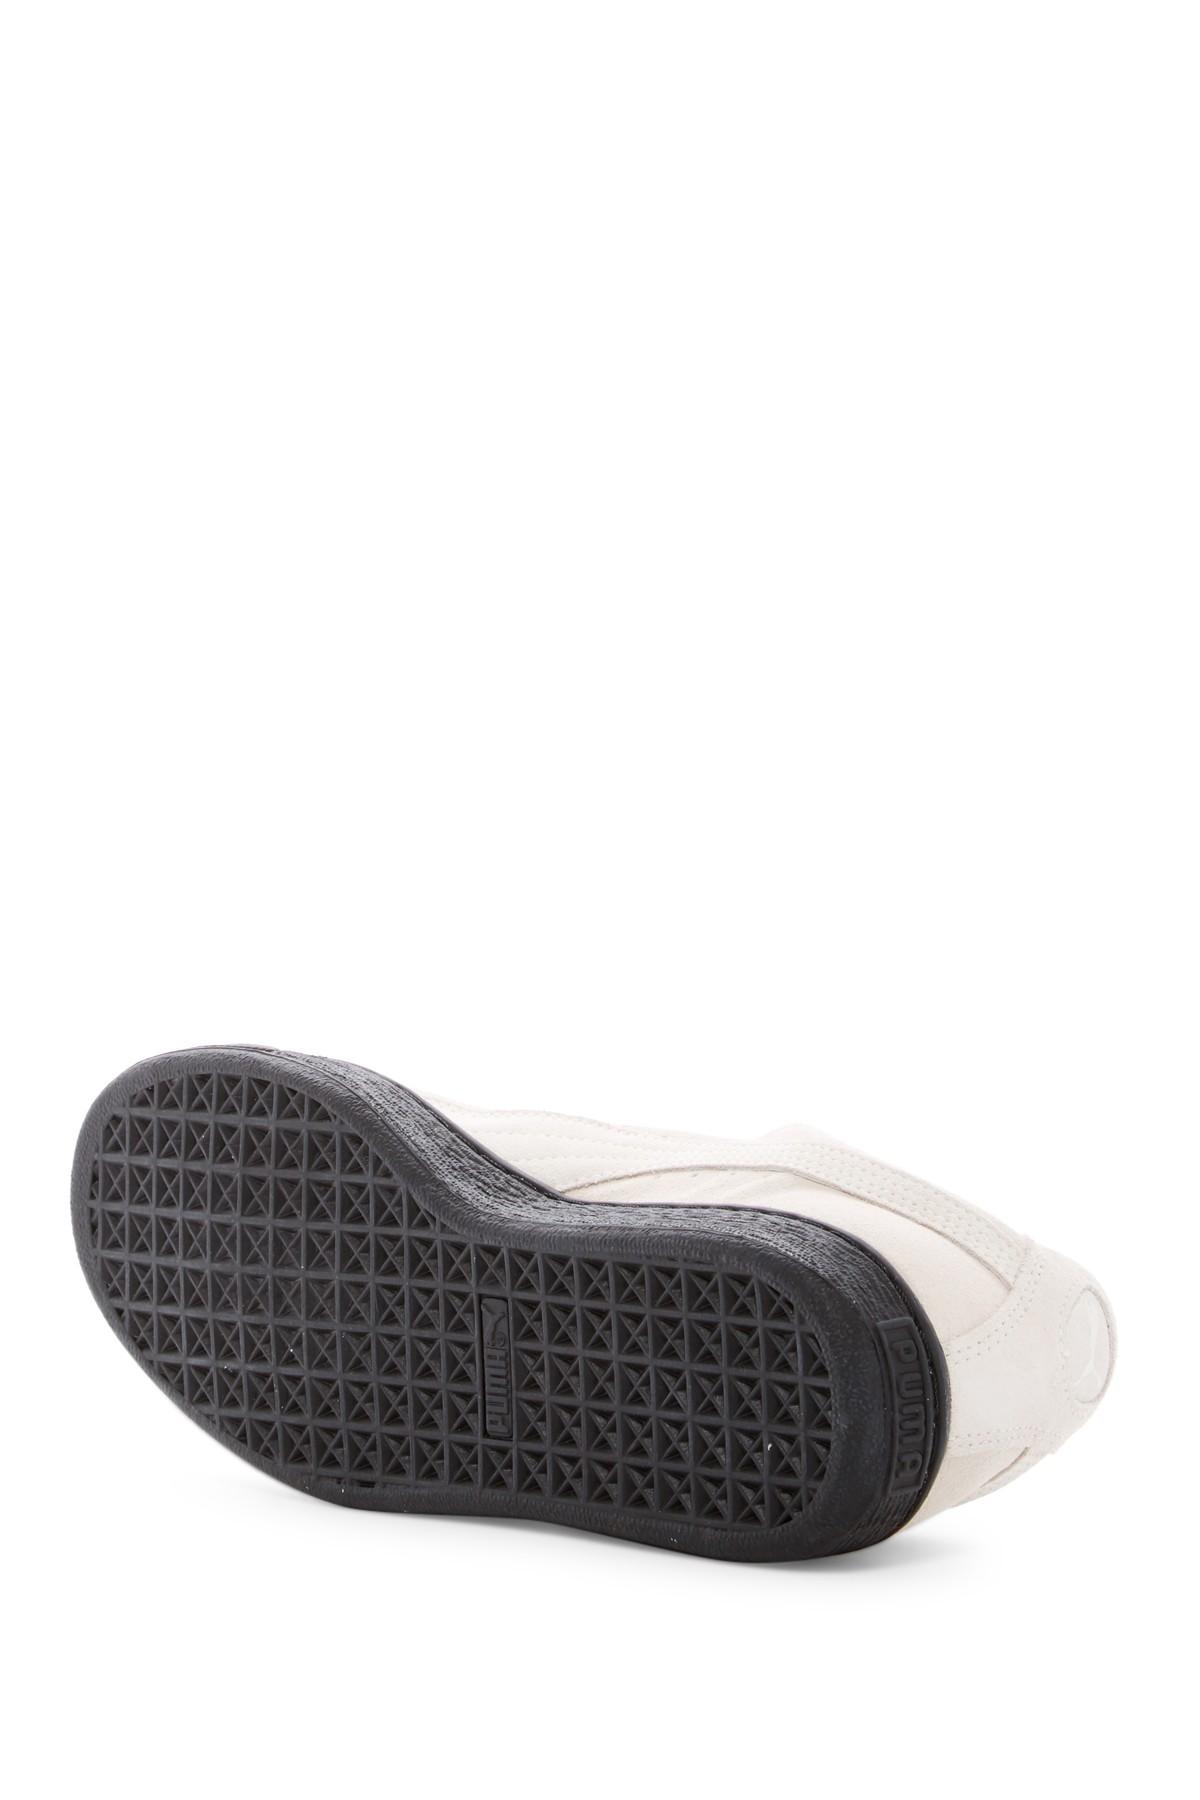 PUMA Suede Black Sole Sneaker in White for Men | Lyst